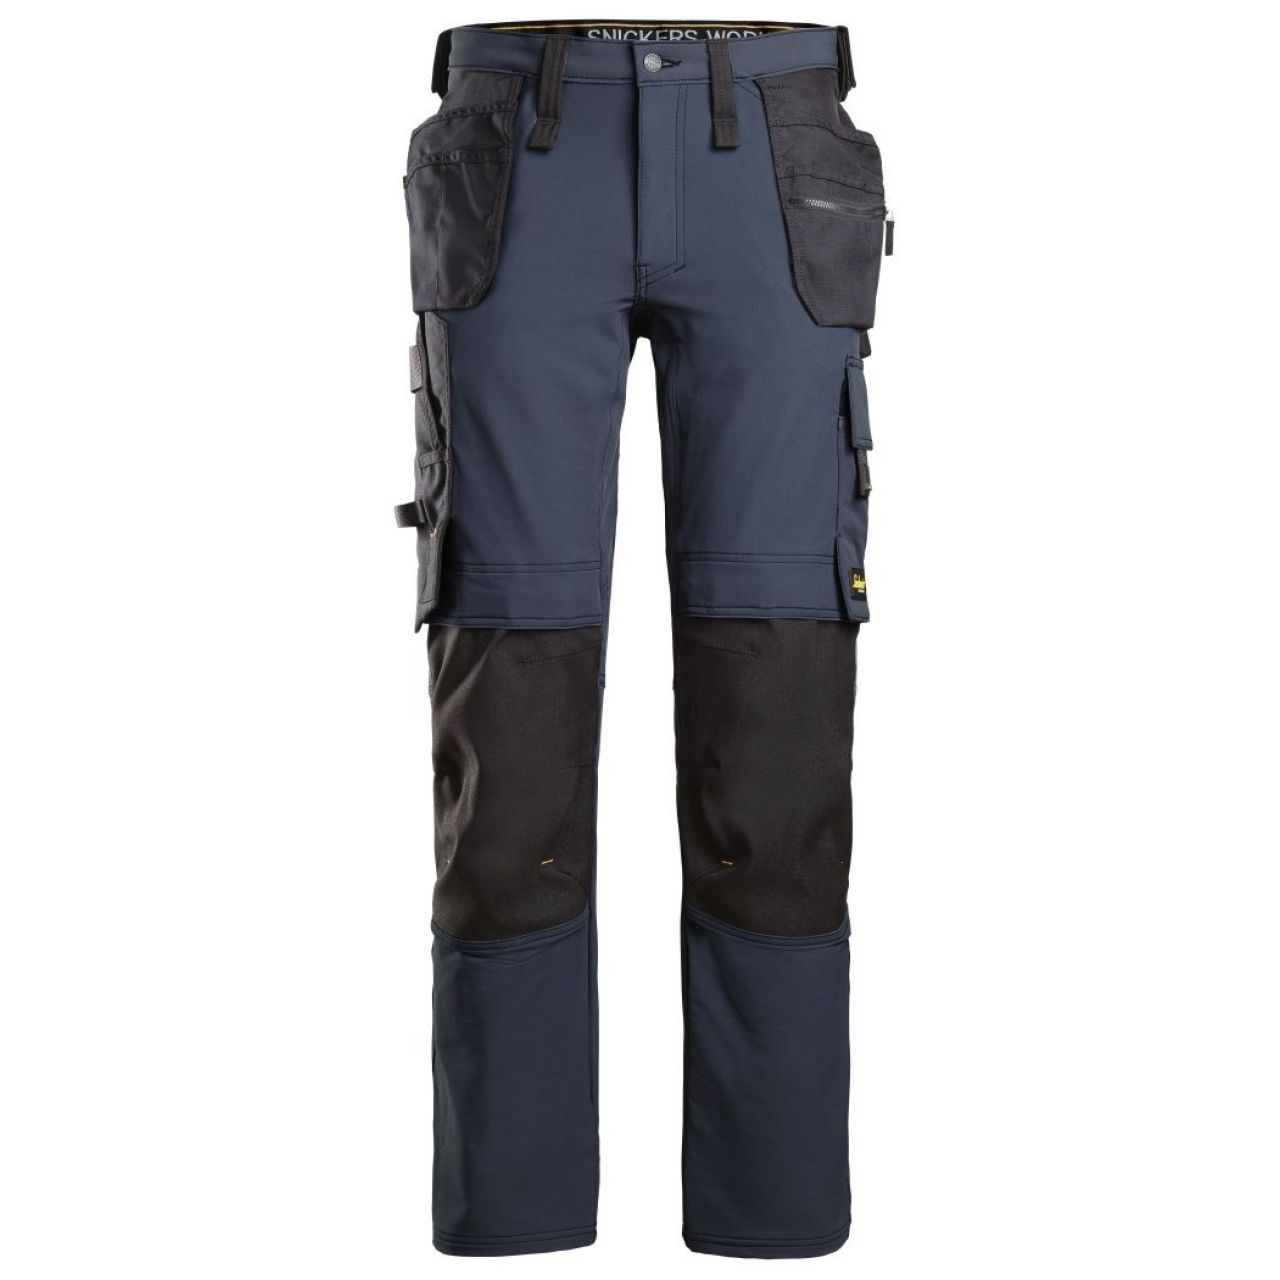 Pantalon elastico AllroundWork bolsillos flotantes azul marino-negro talla 058